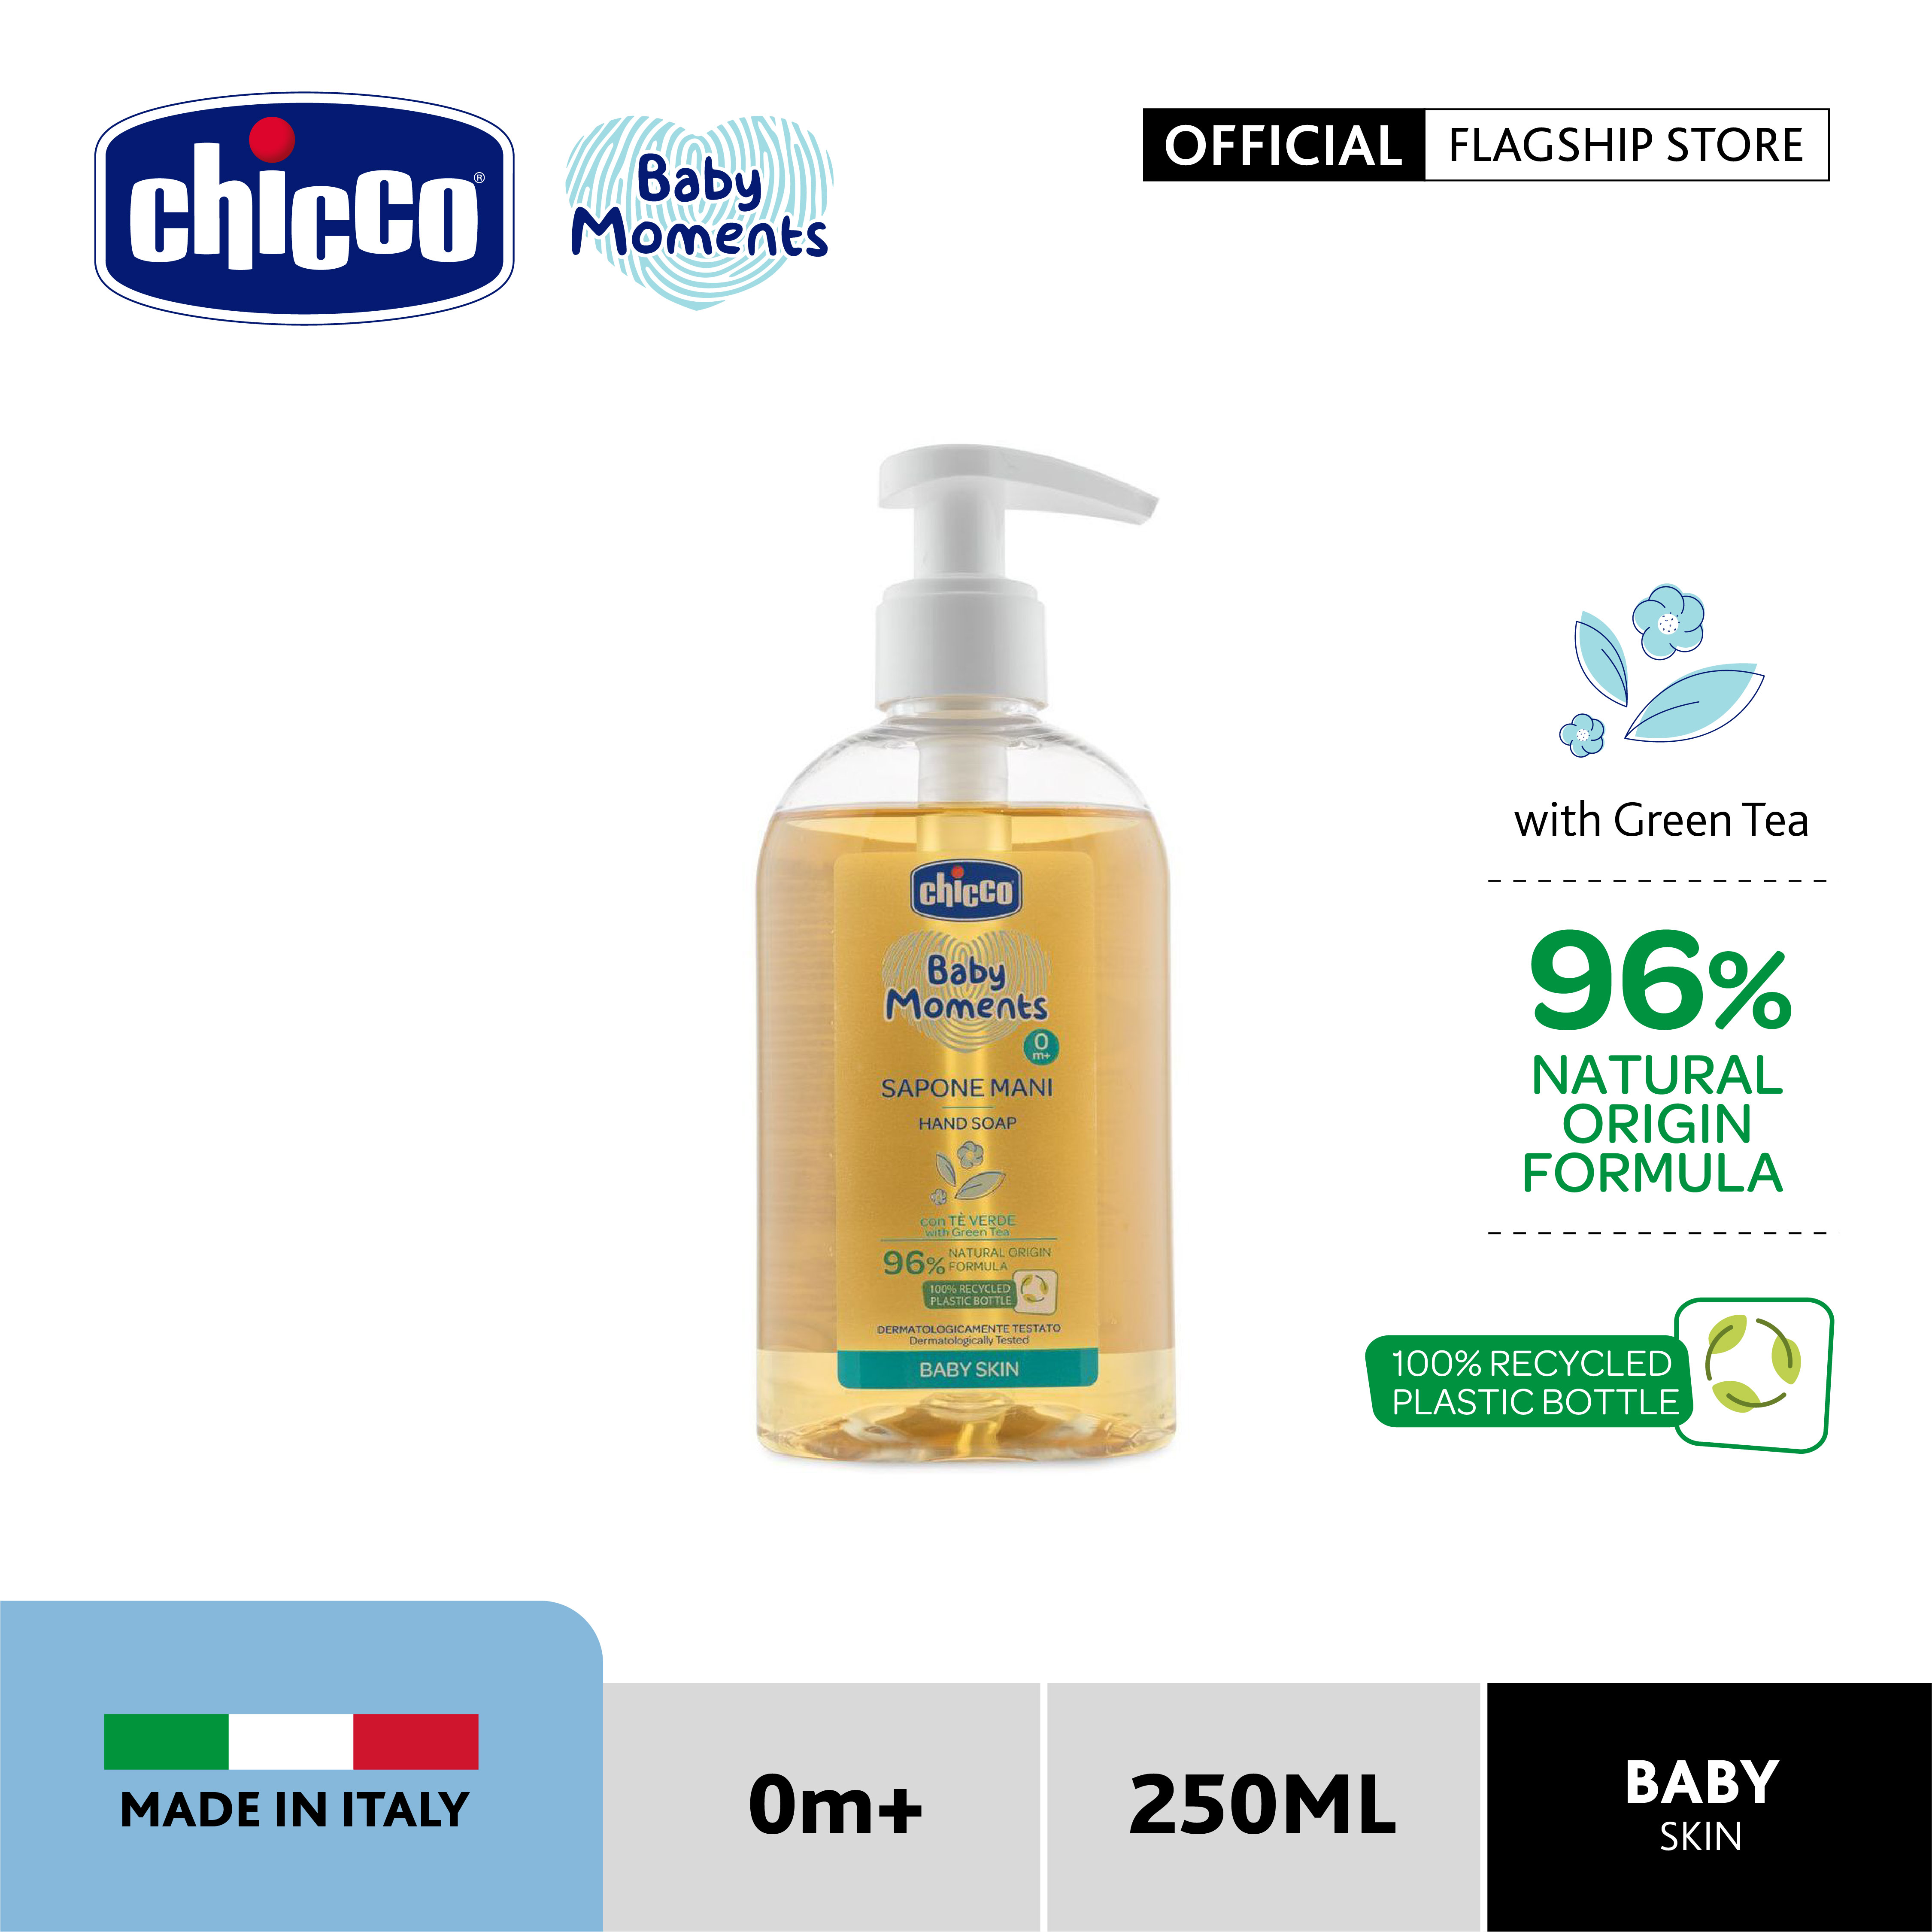 (Baby Skin) Chicco Baby Moments Liquid Hand Soap